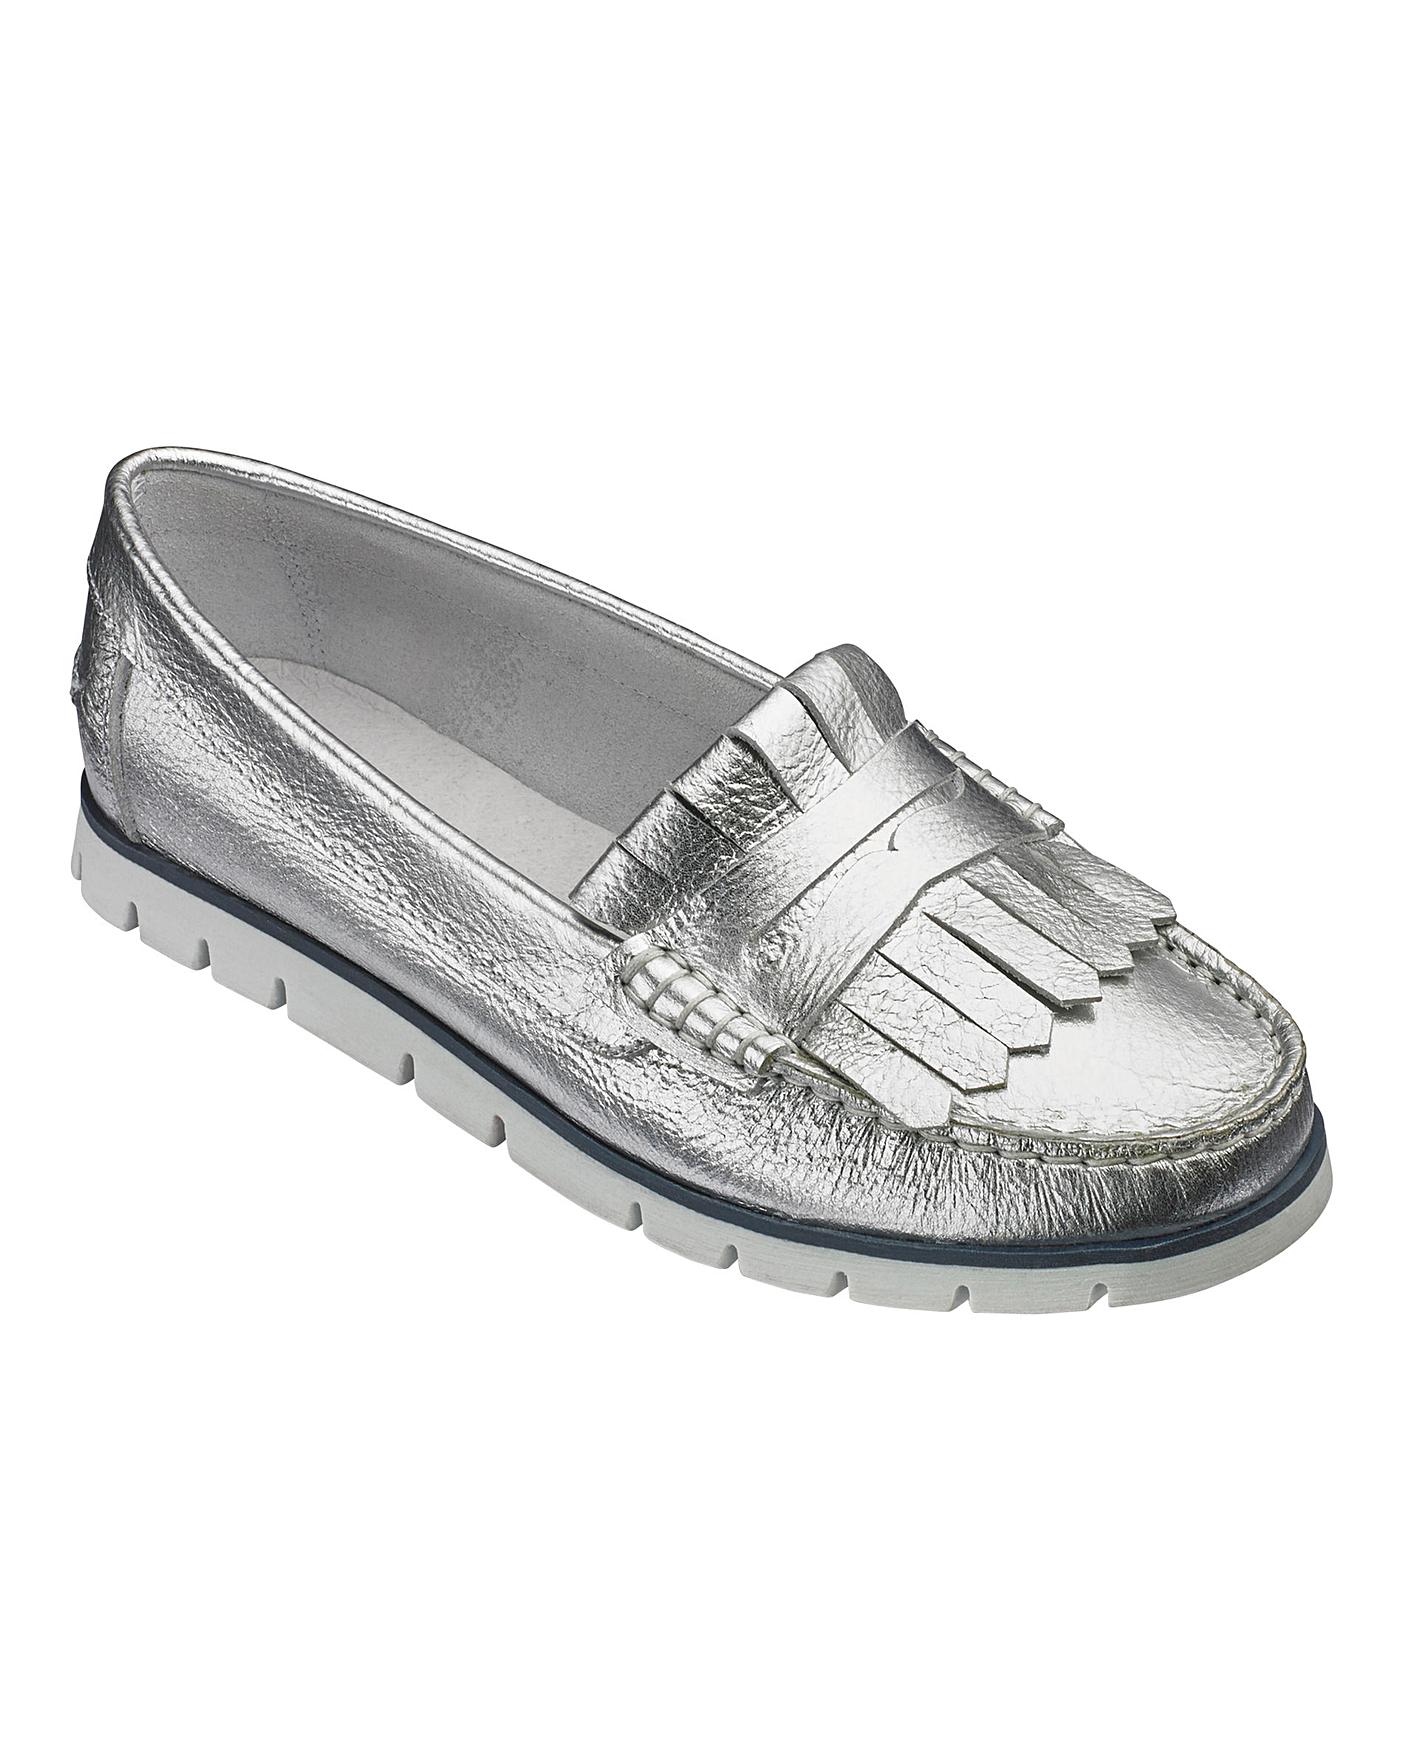 heavenly soles shoes website